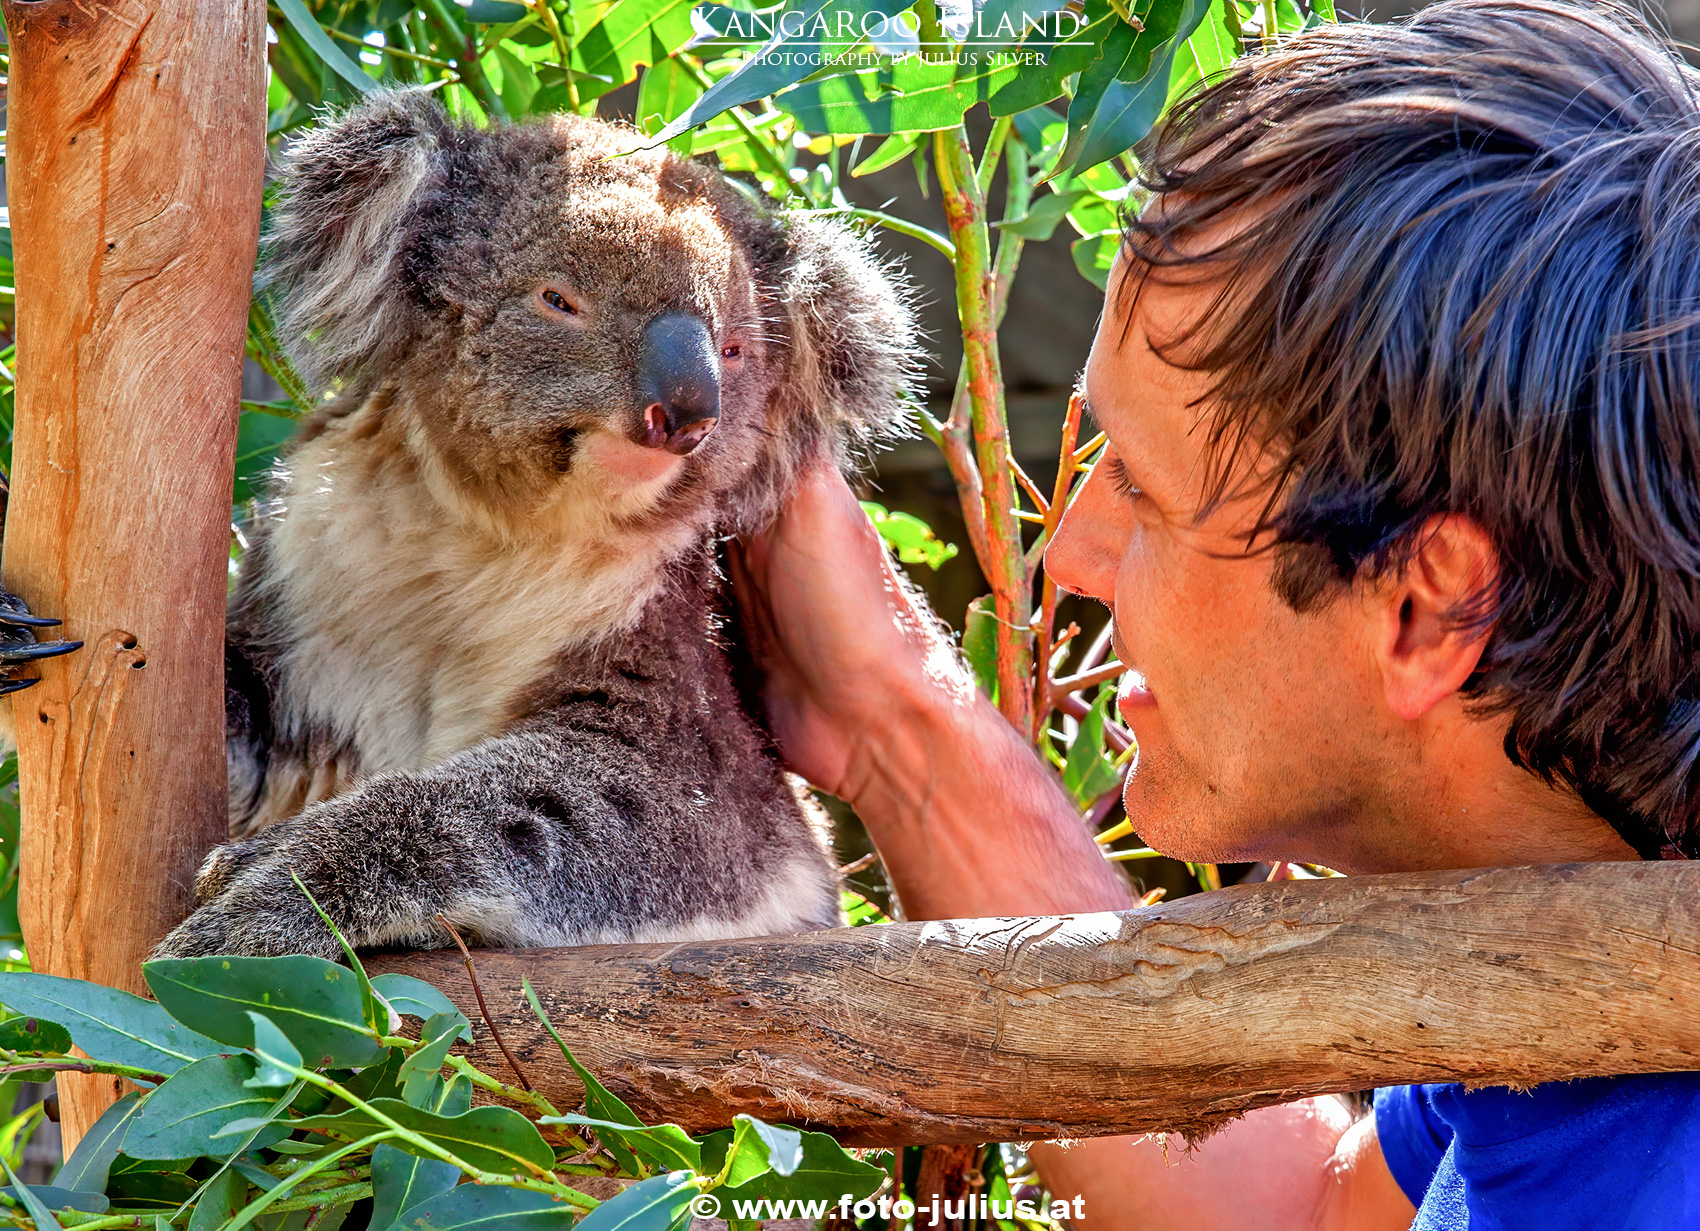 Australia_109a_Kangaroo_Island_Koala.jpg, 1,2MB